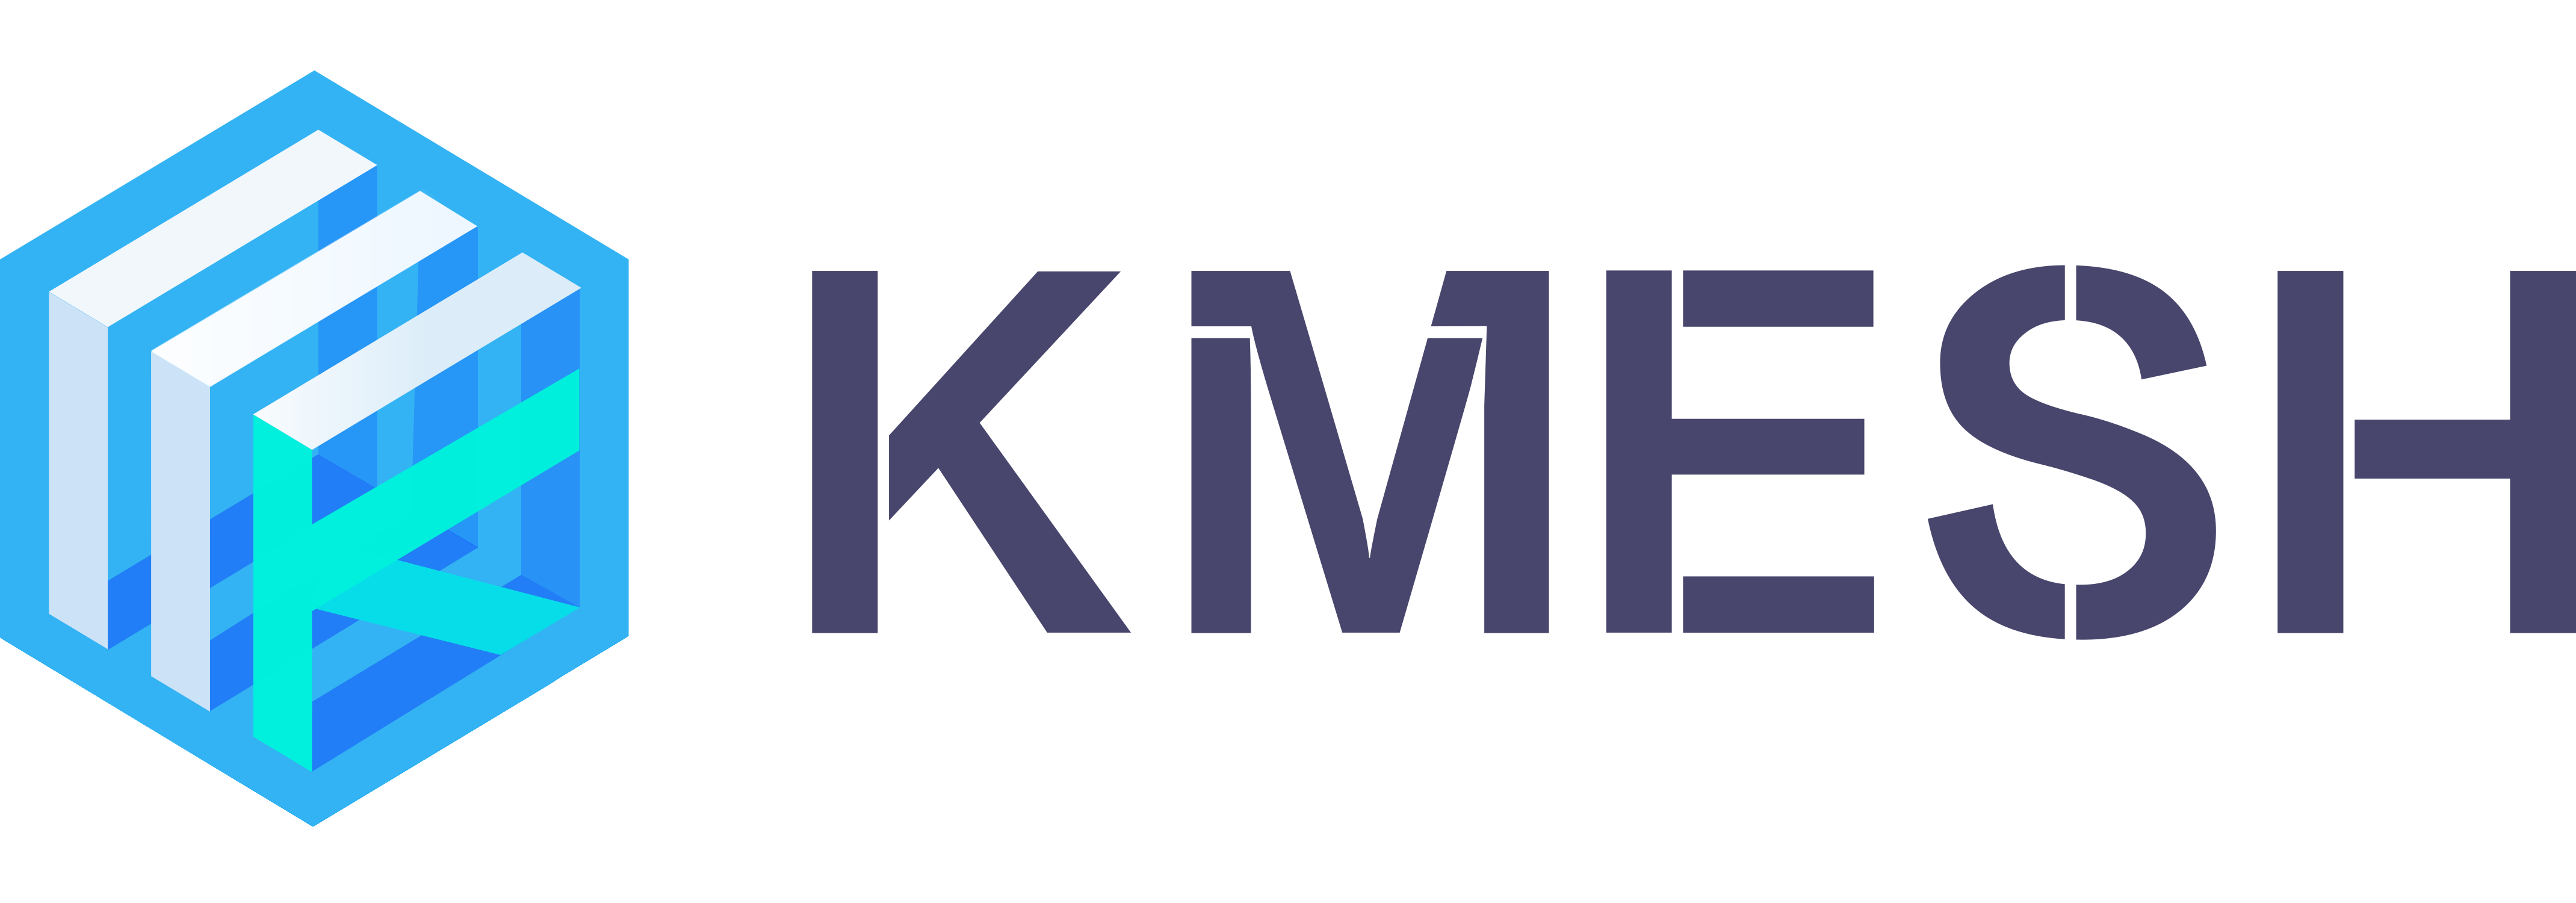 kmesh-logo